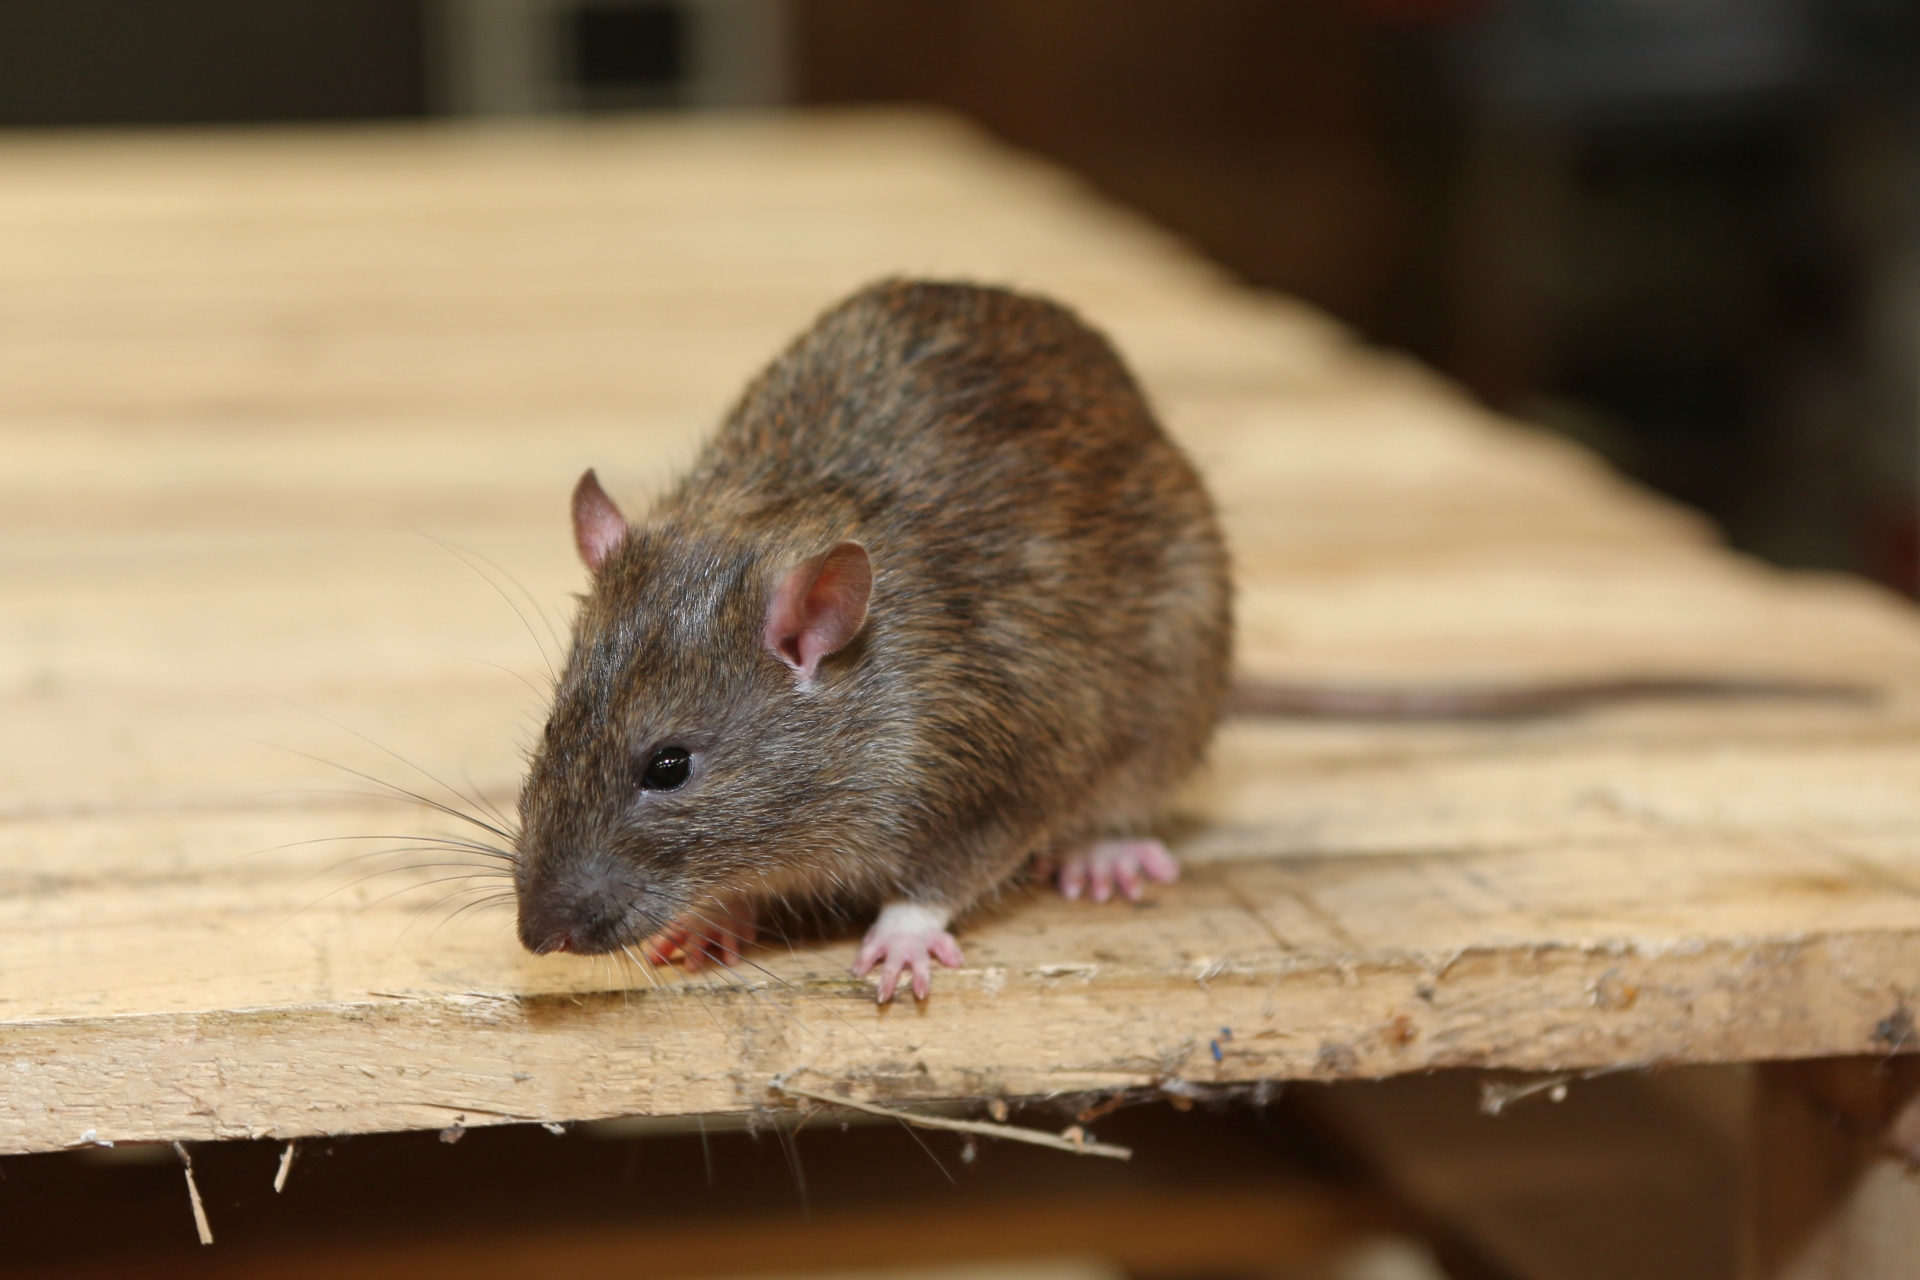 Rat extermination, Pest Control in Putney, SW15. Call Now 020 8166 9746